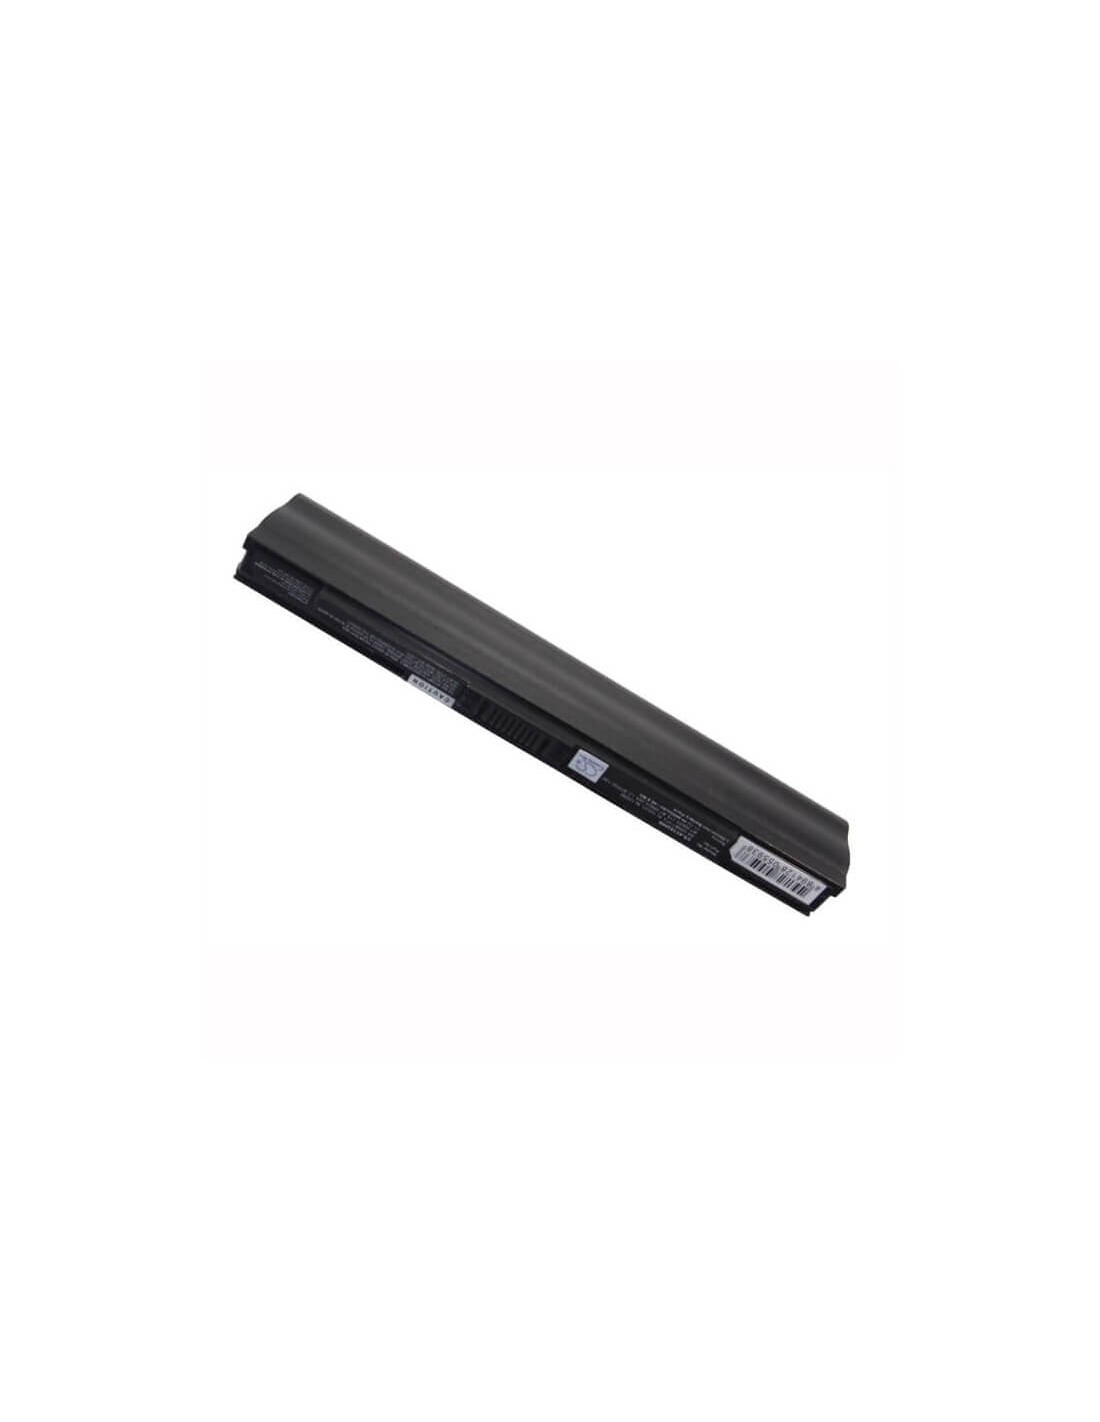 Black Battery for Acer Aspire 1430, Aspire 1430-4857, Aspire 1430-4768 11.1V, 4400mAh - 48.84Wh